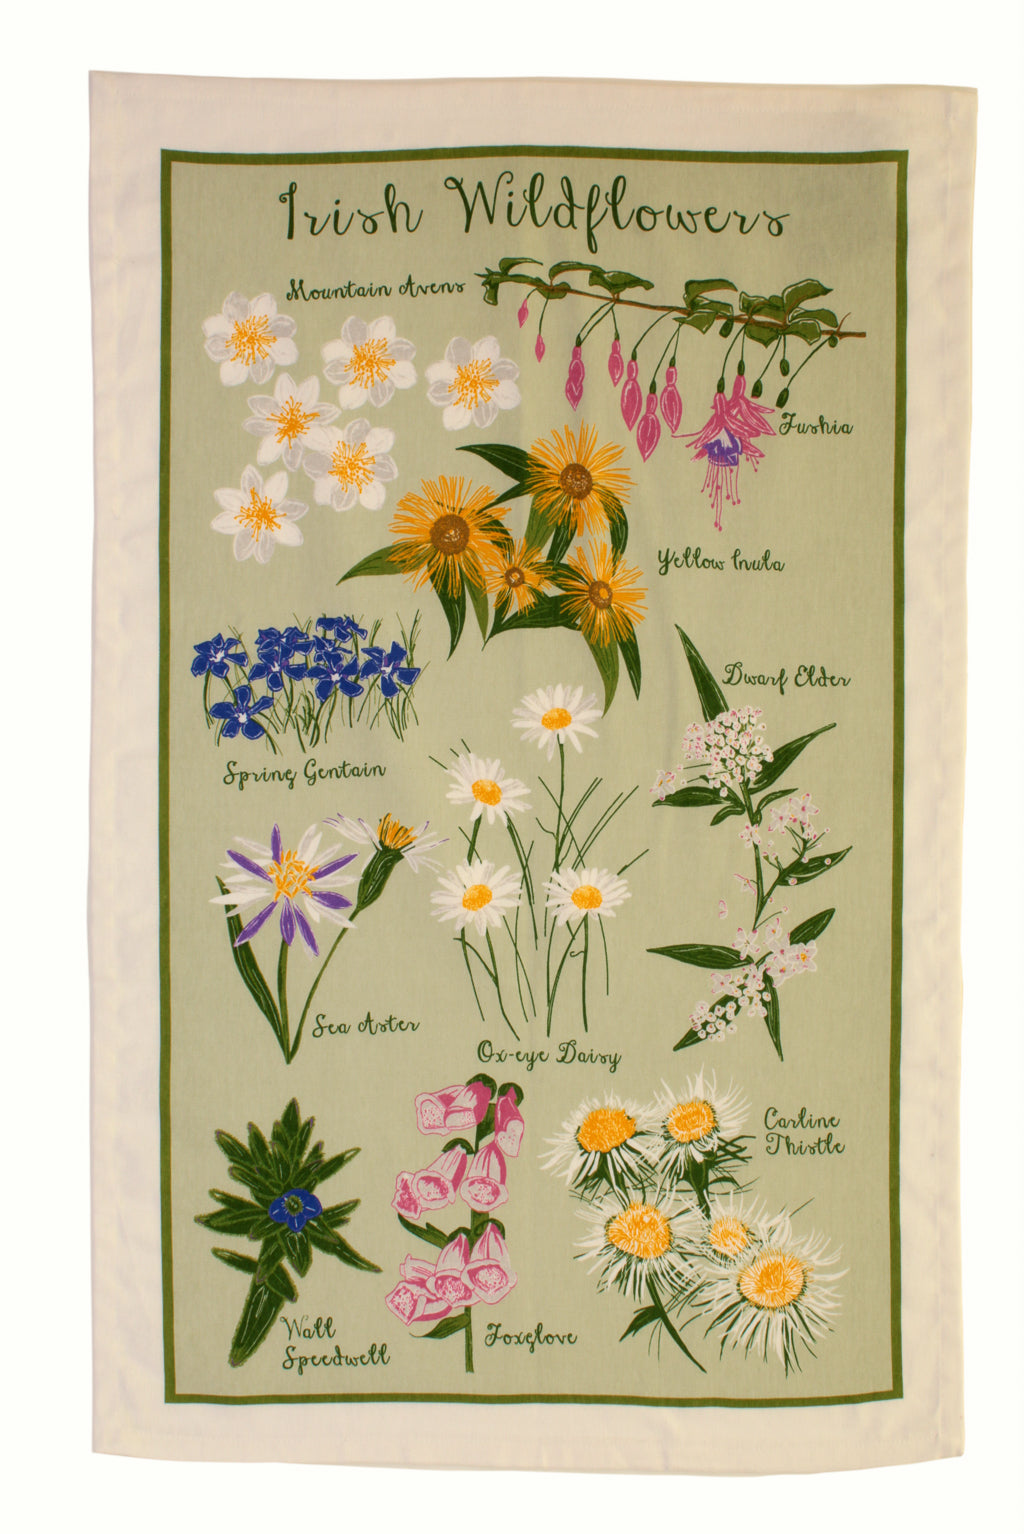 Tea Towel "Irish Wildflowers"